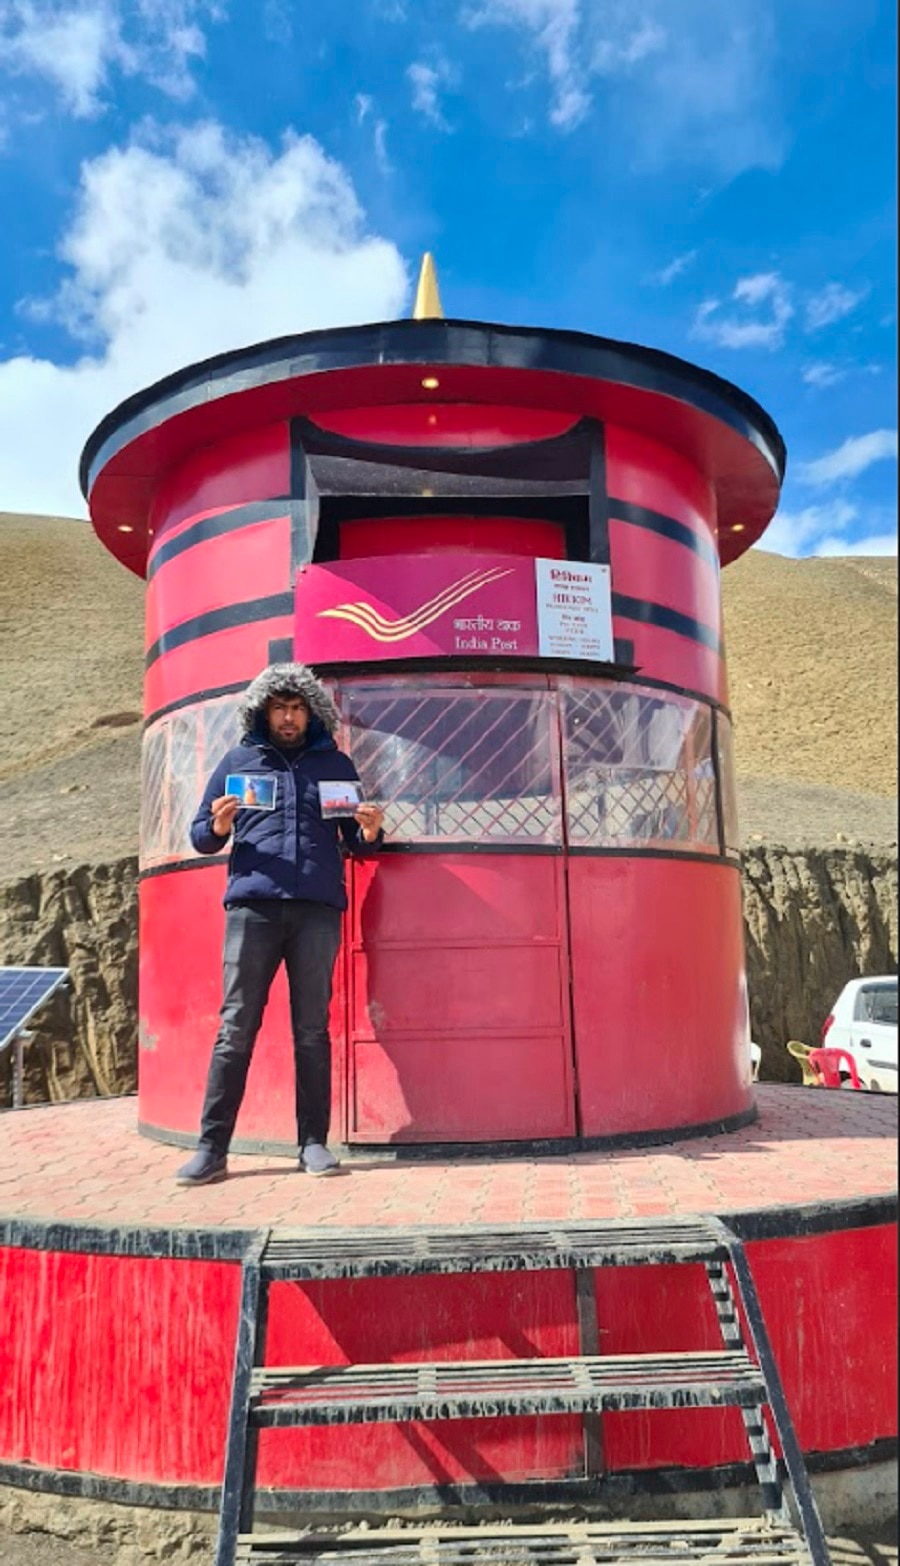 world largest post office hikkim village photos 